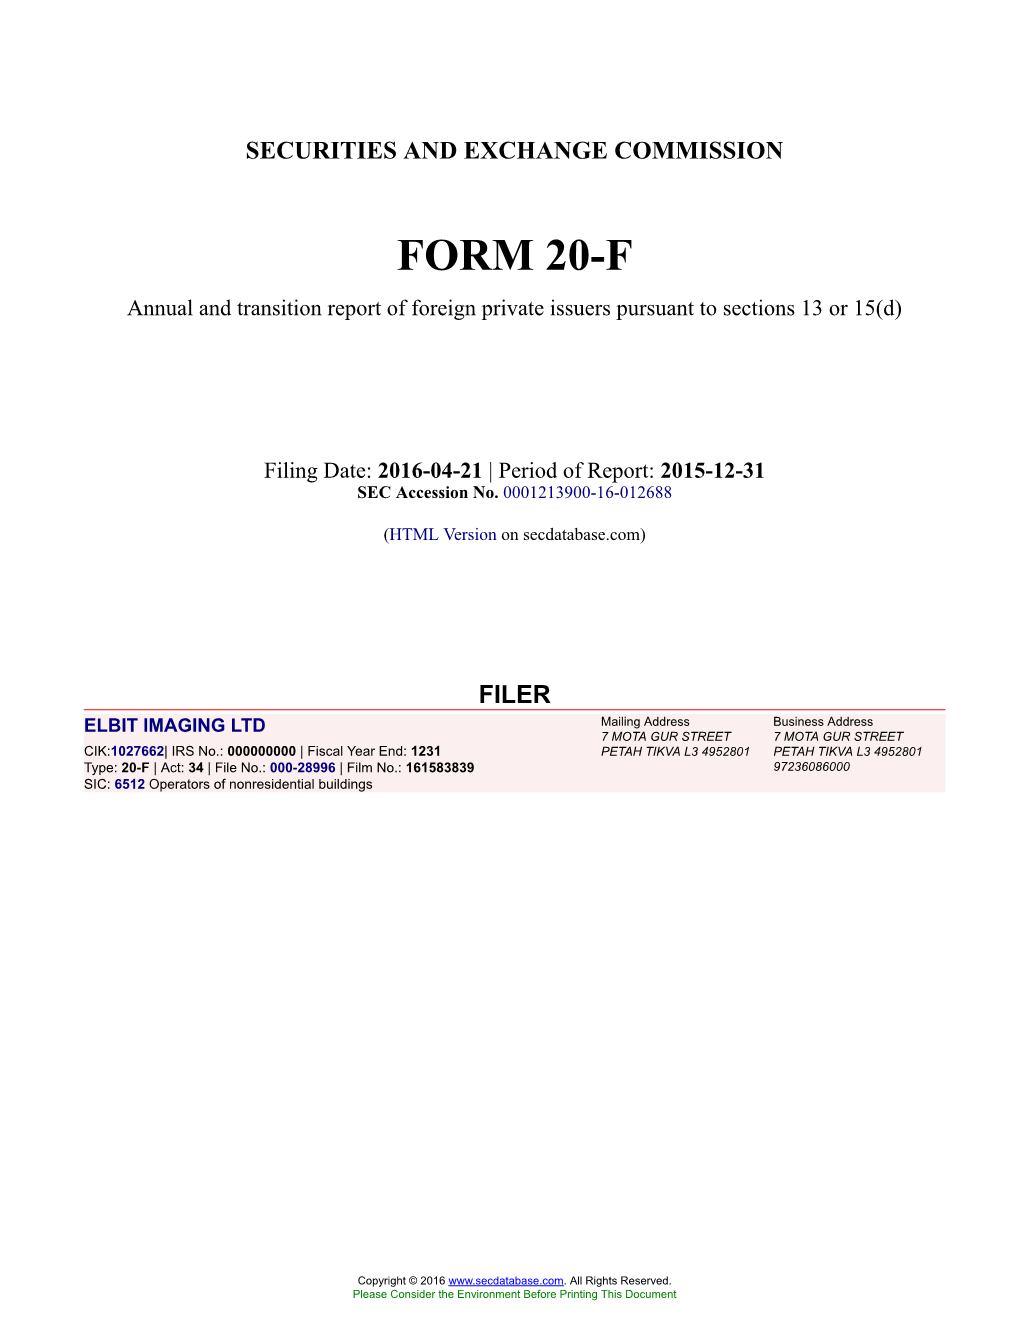 ELBIT IMAGING LTD Form 20-F Filed 2016-04-21